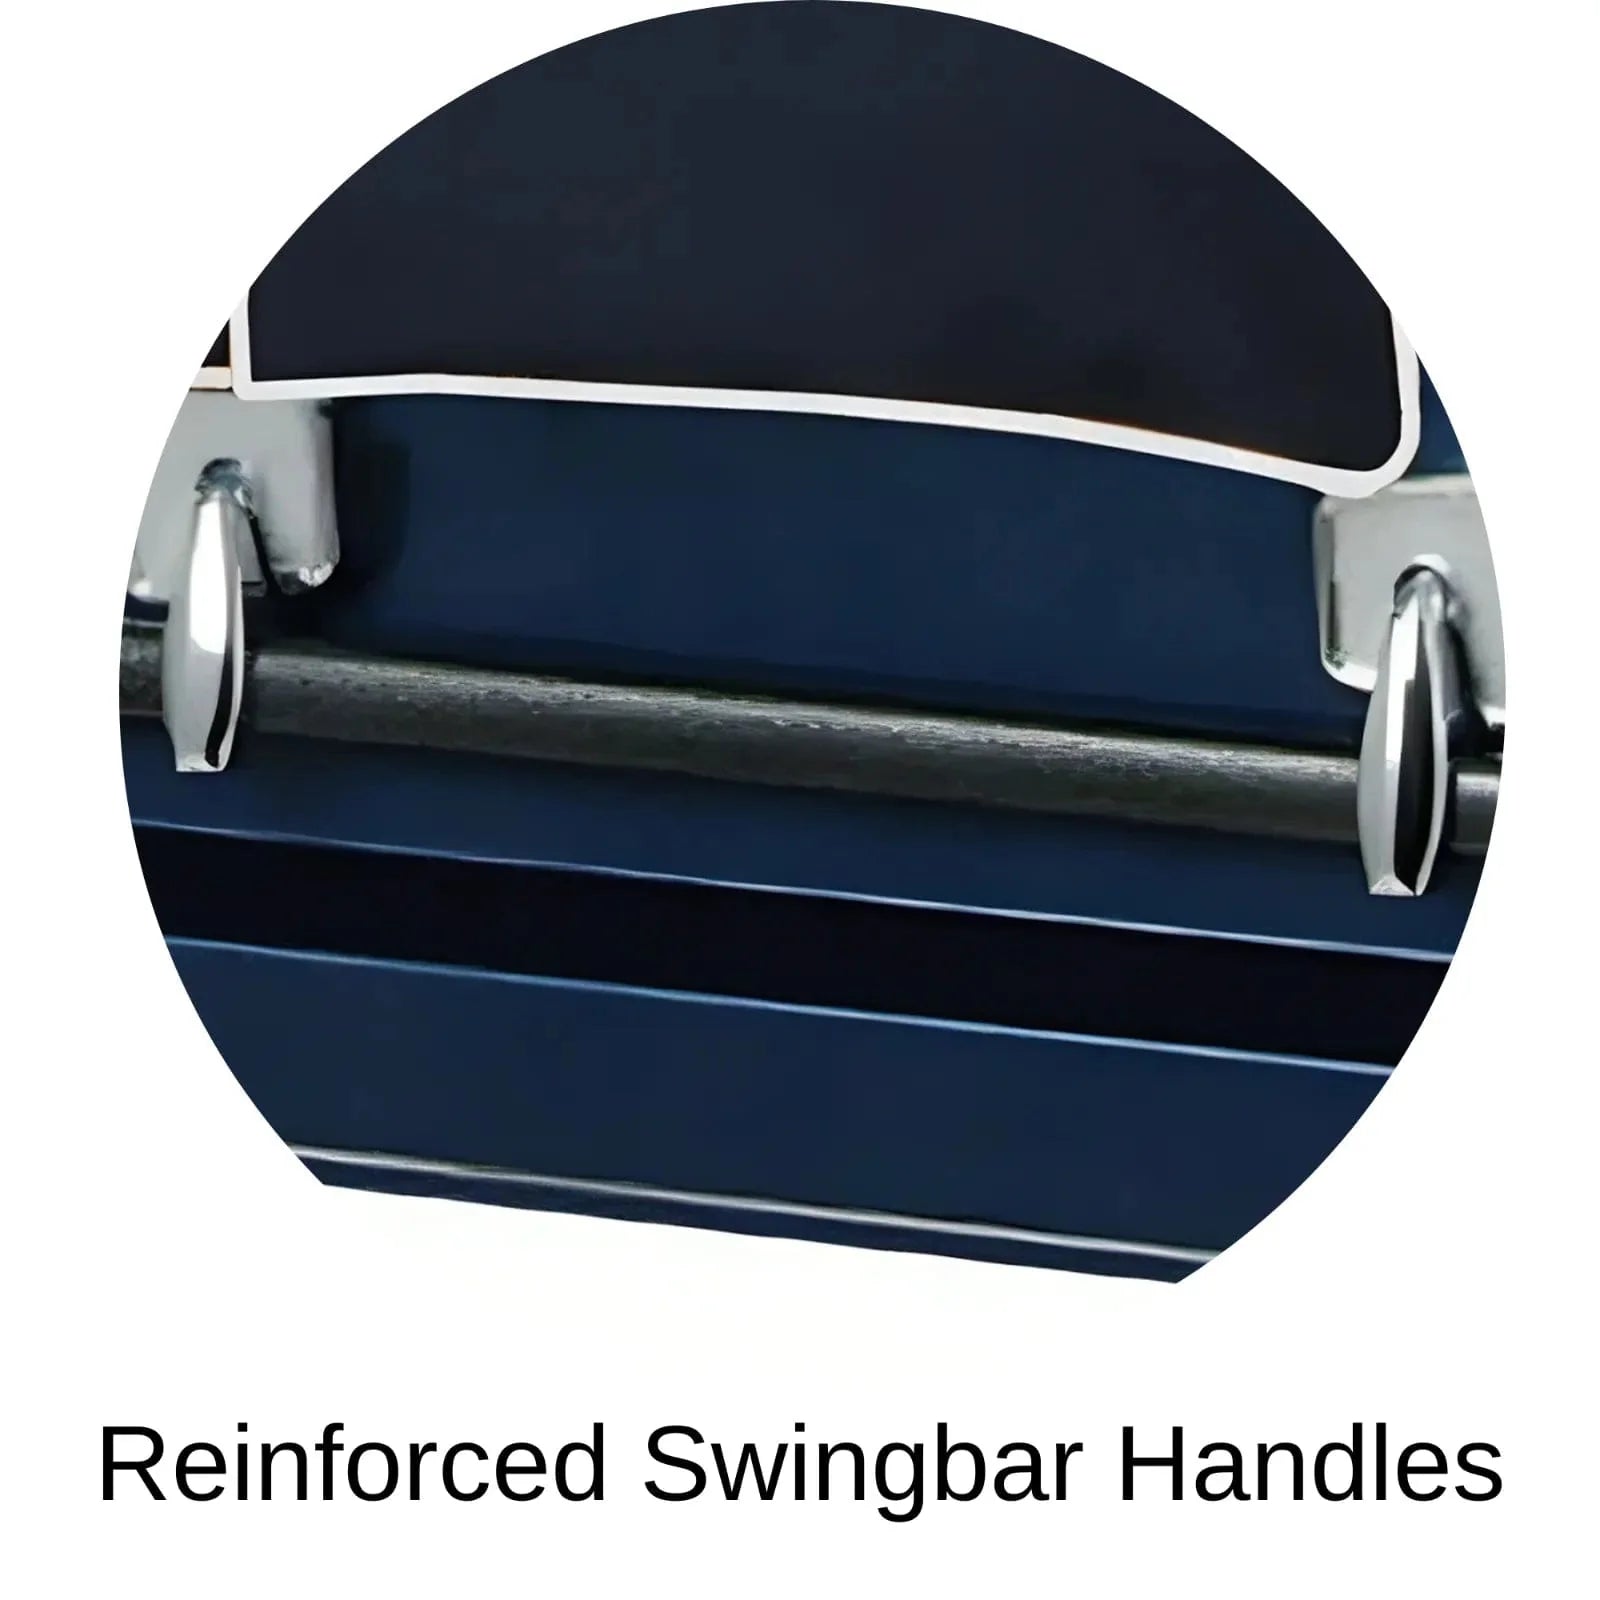 Reinforced swing bar handles